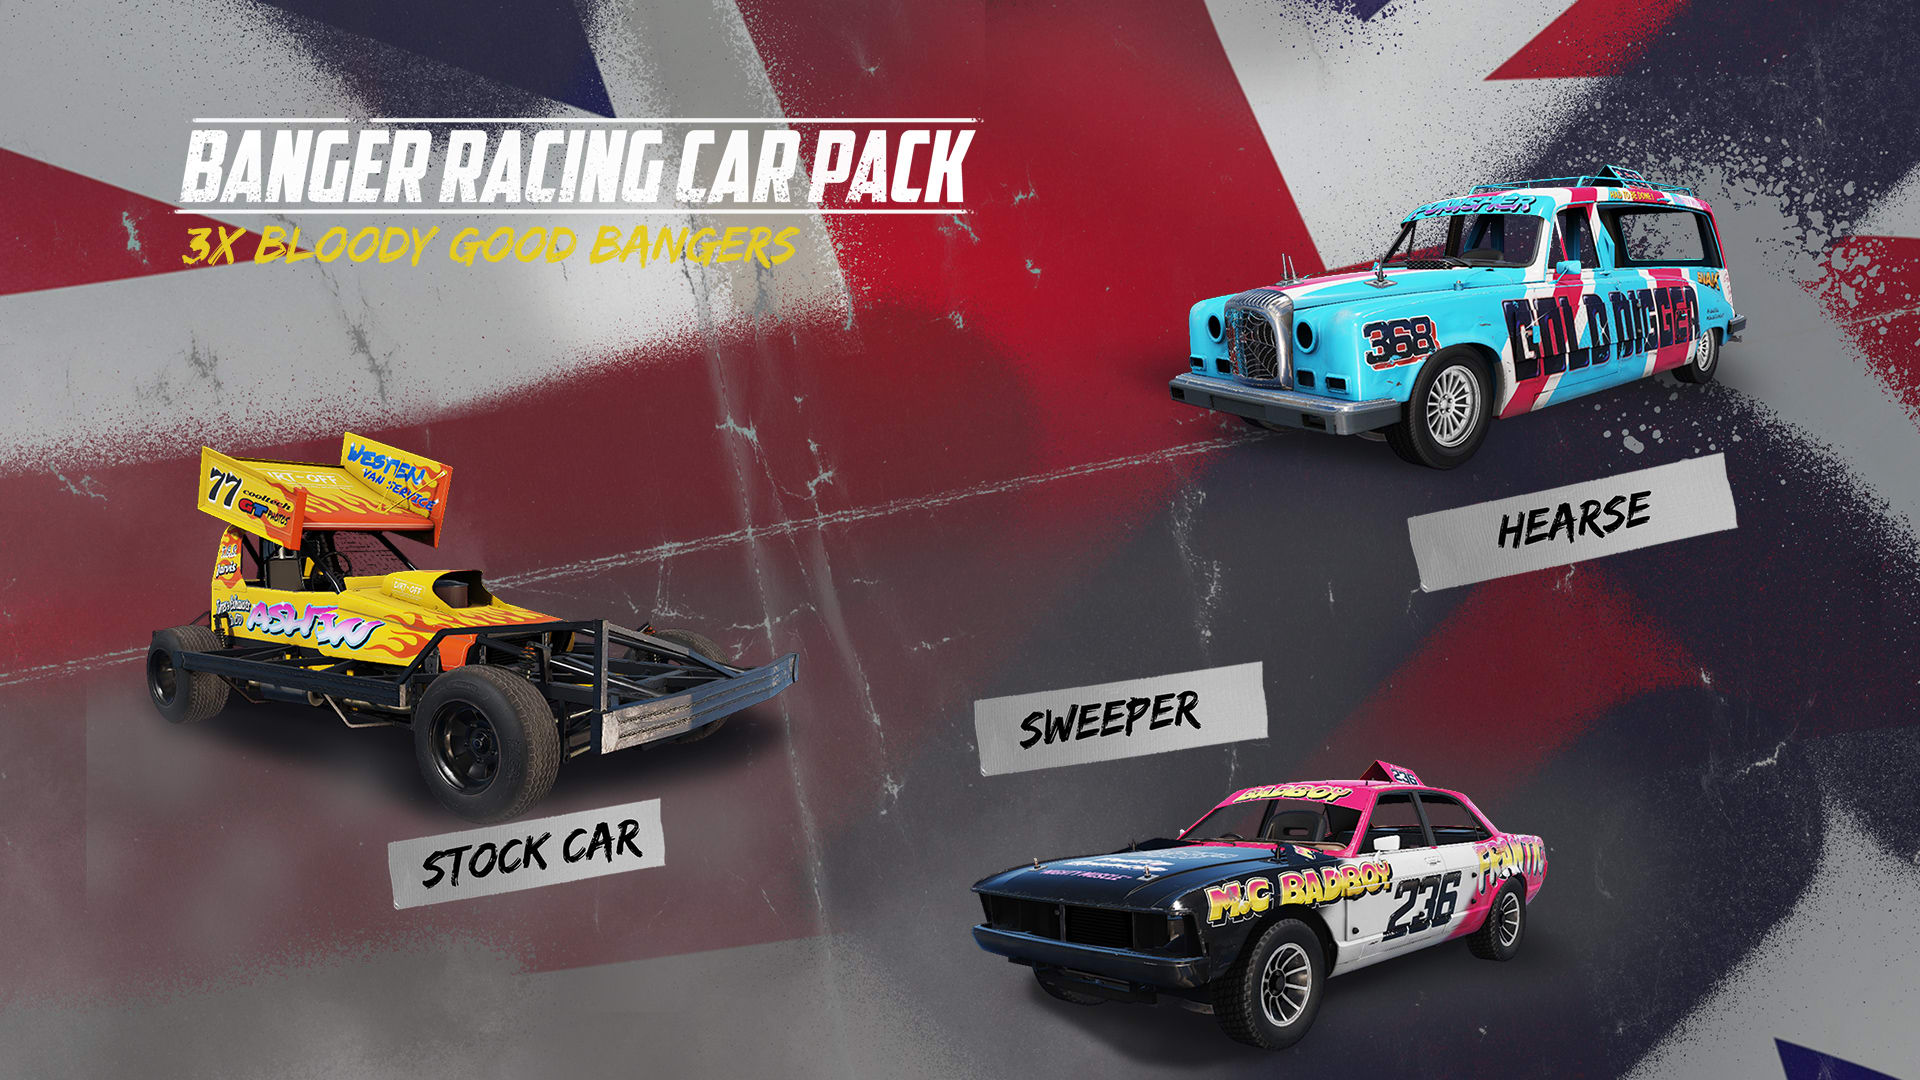 Banger Racing Car Pack